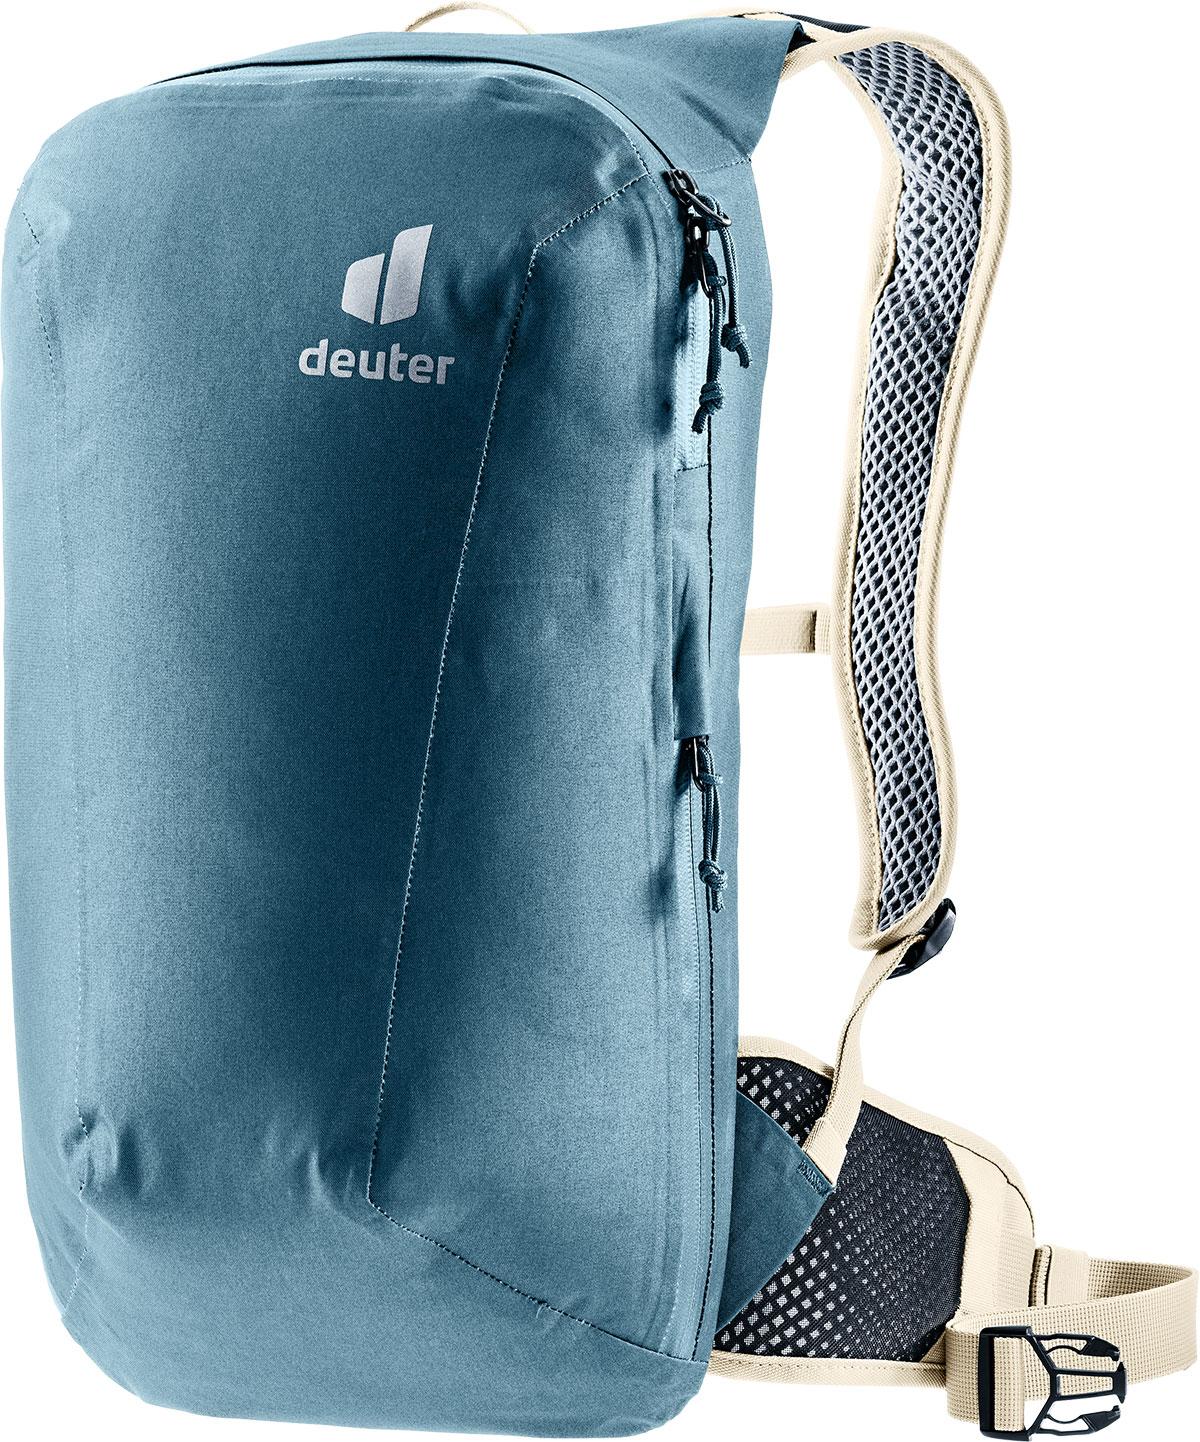 Deuter Plamort 12 Waterproof Backpack  Atlantic Desert